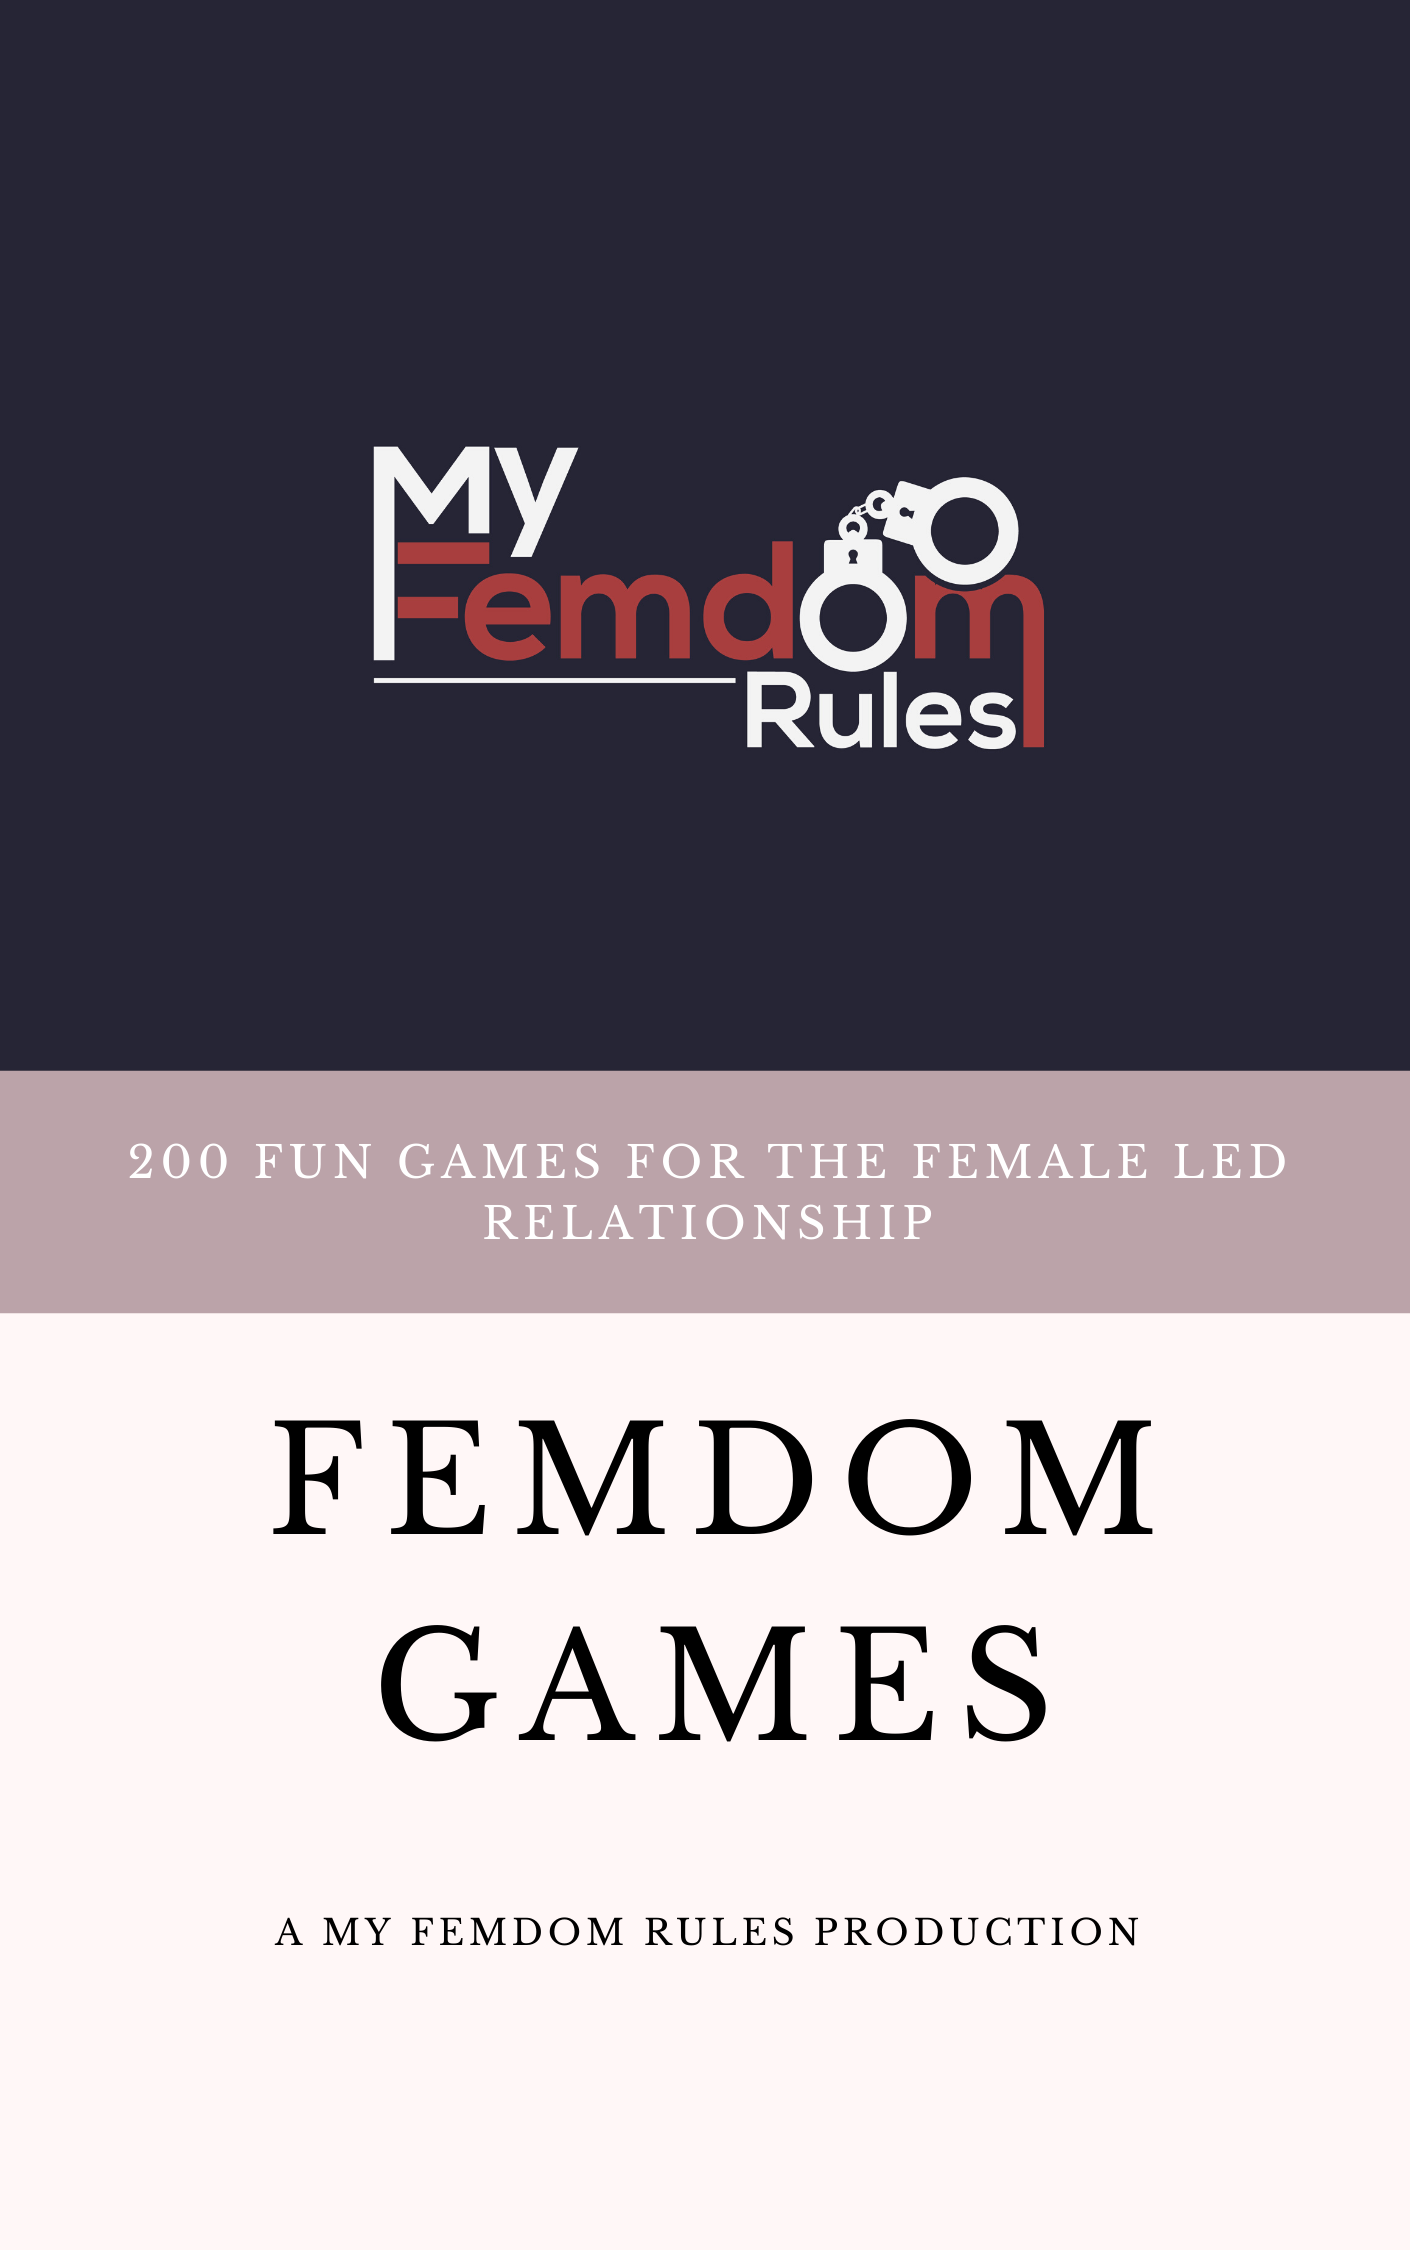 Femdom Games photo